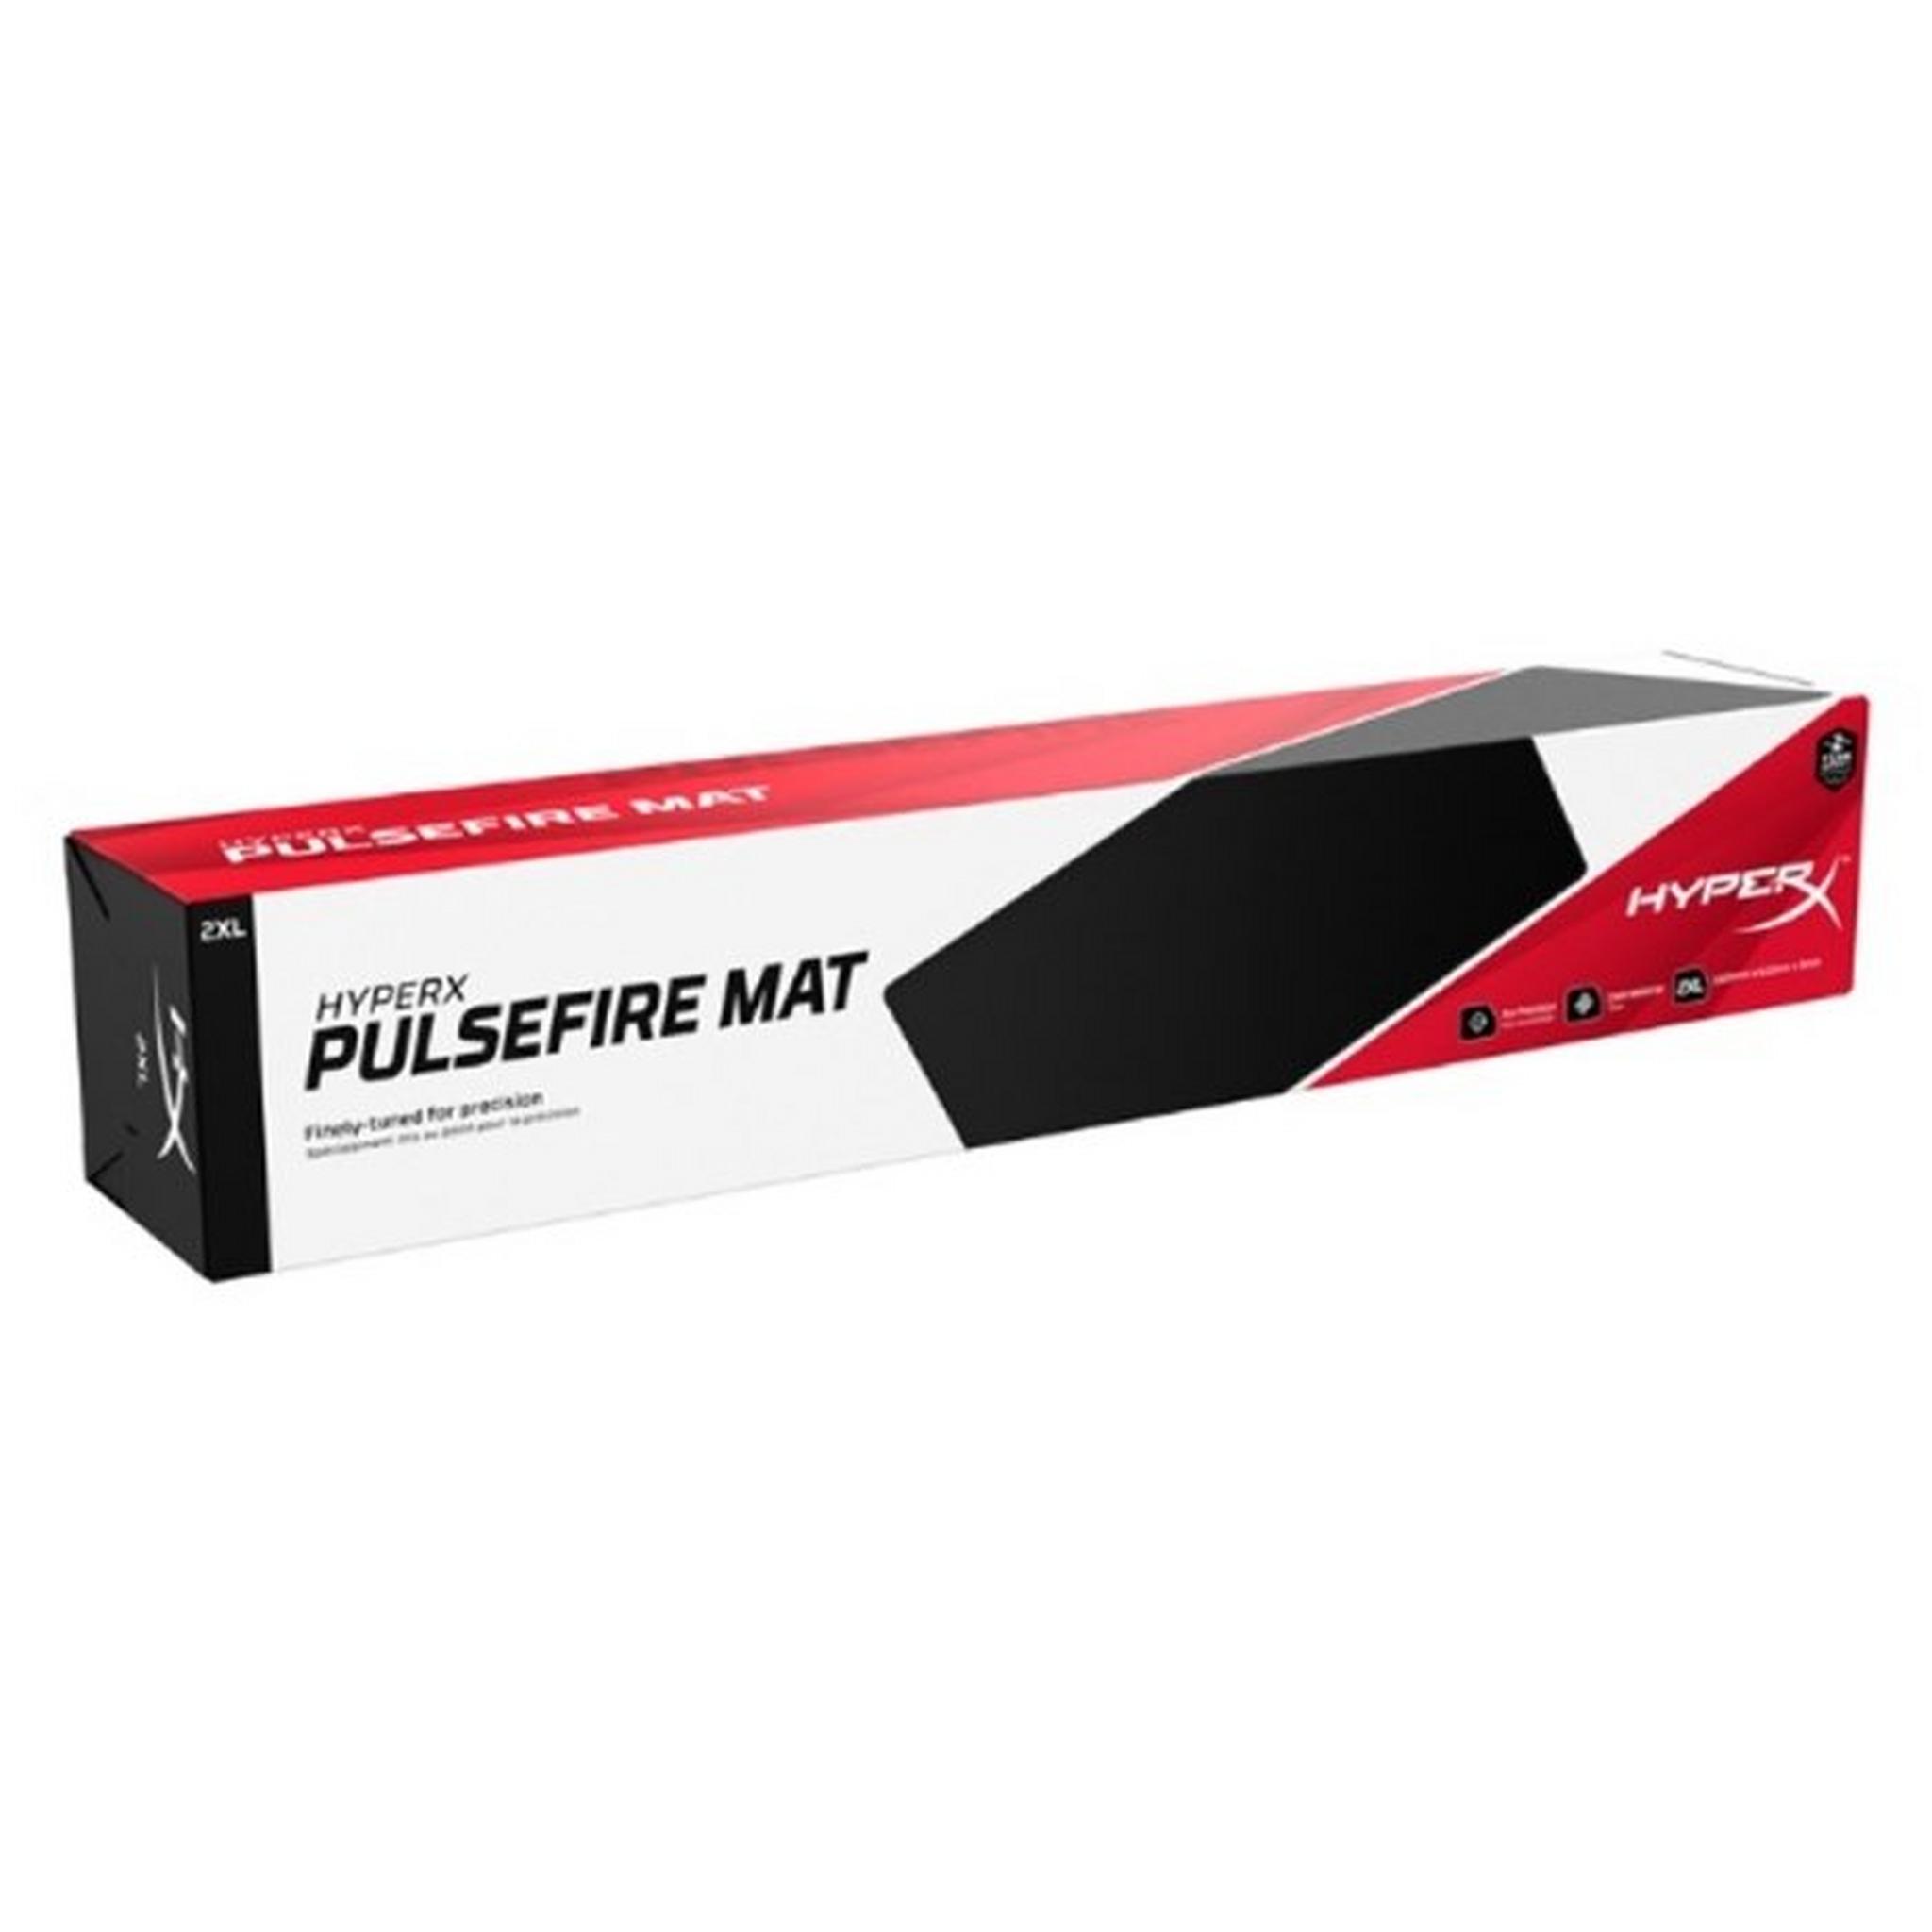 HyperX Pulsefire Mat Mousepad (2XL)